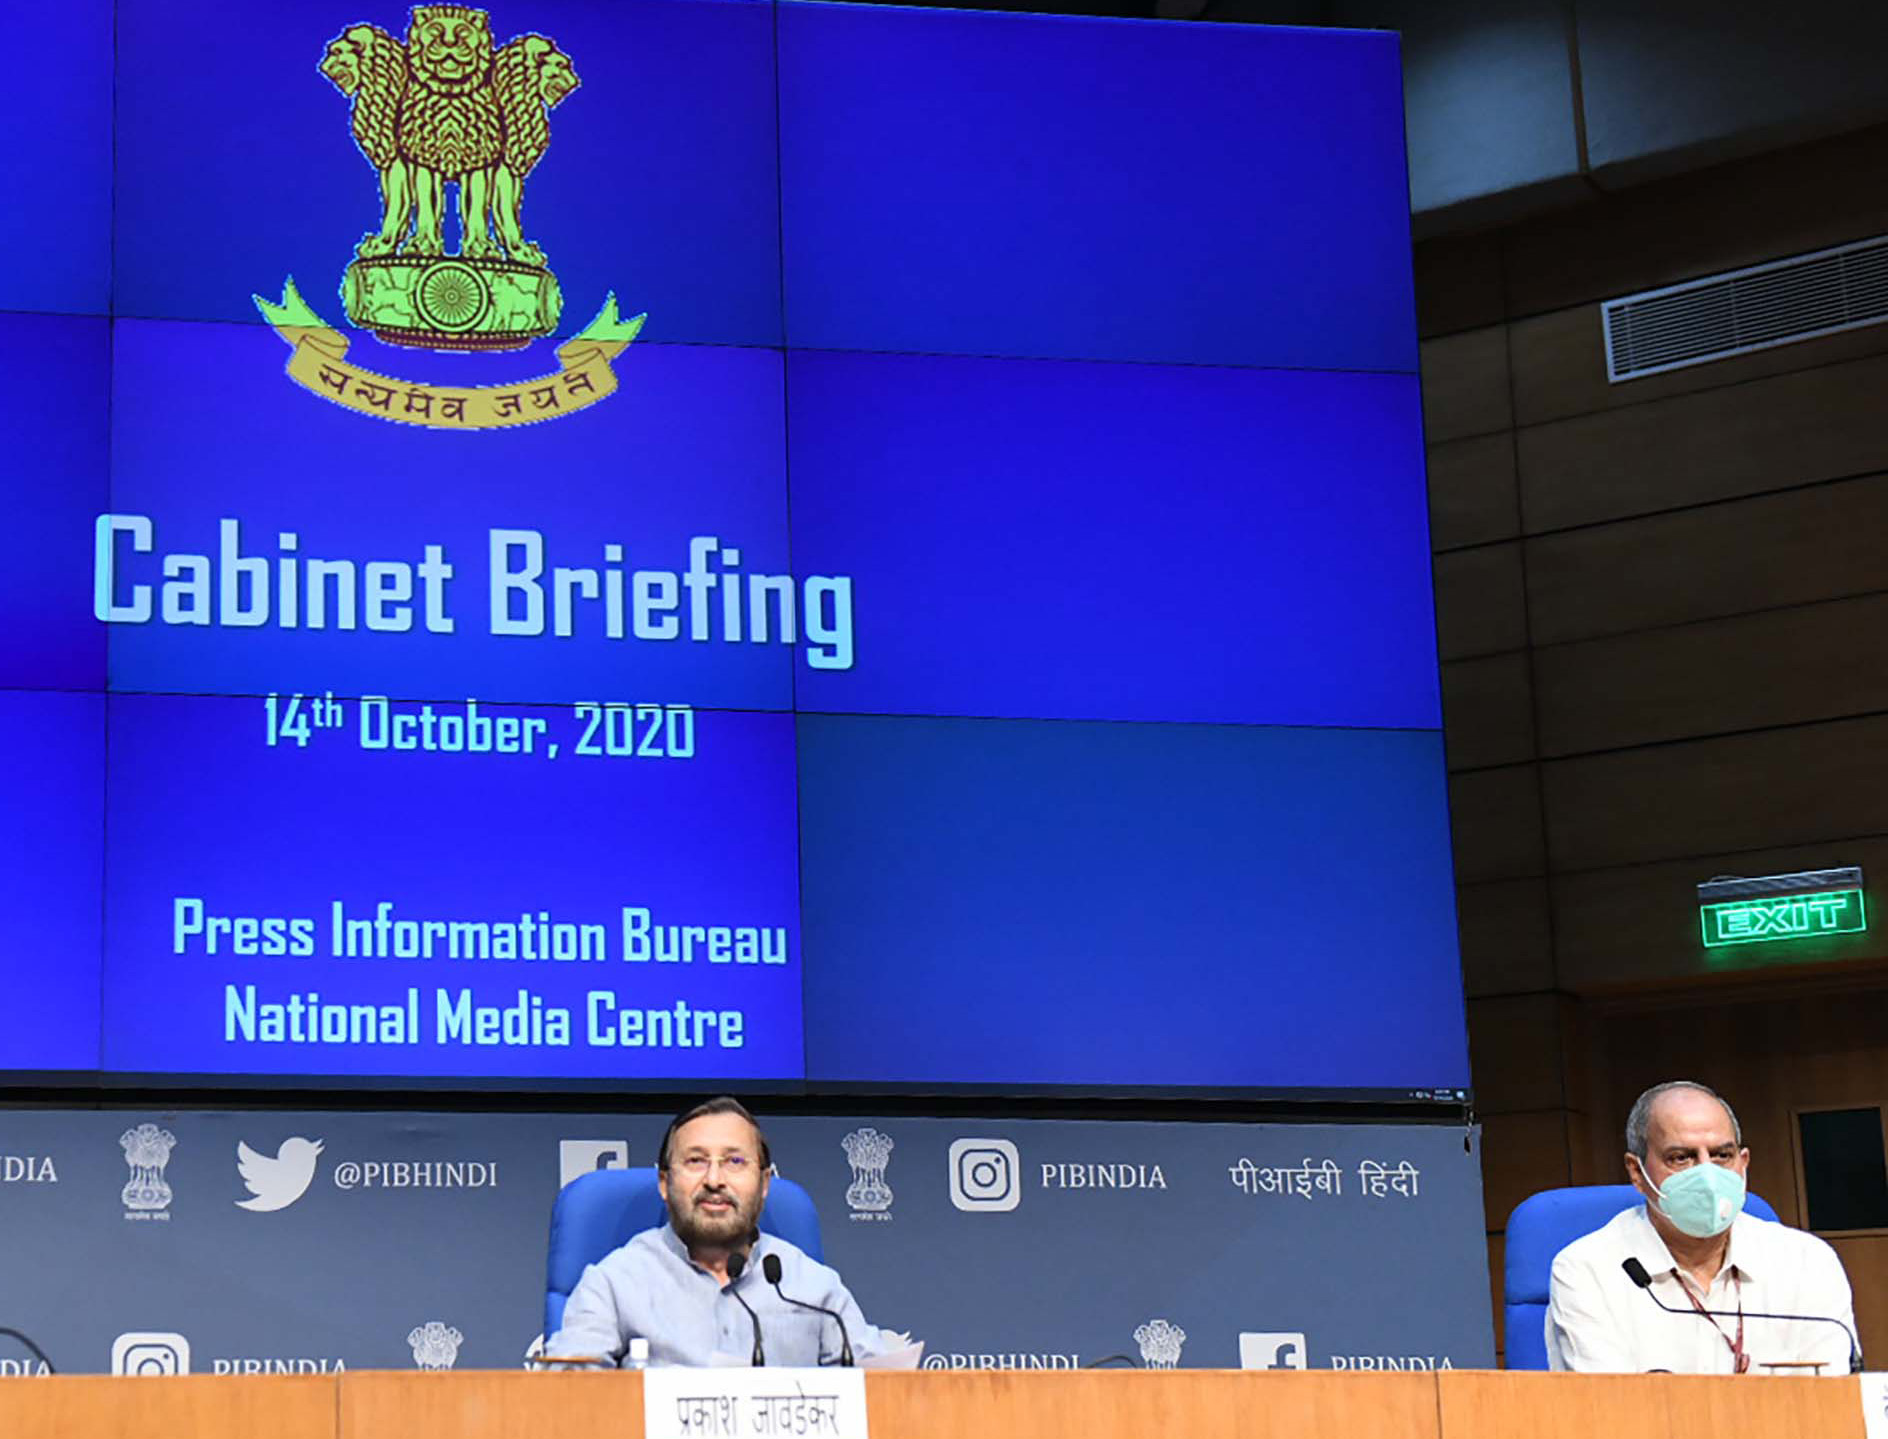 Prakash Javadekar holding a press conference on Cabinet Decisions, in New Delhi on October 14, 2020. The Principal Director General (M&C), Press Information Bureau, Shri K.S. Dhatwalia is also seen.